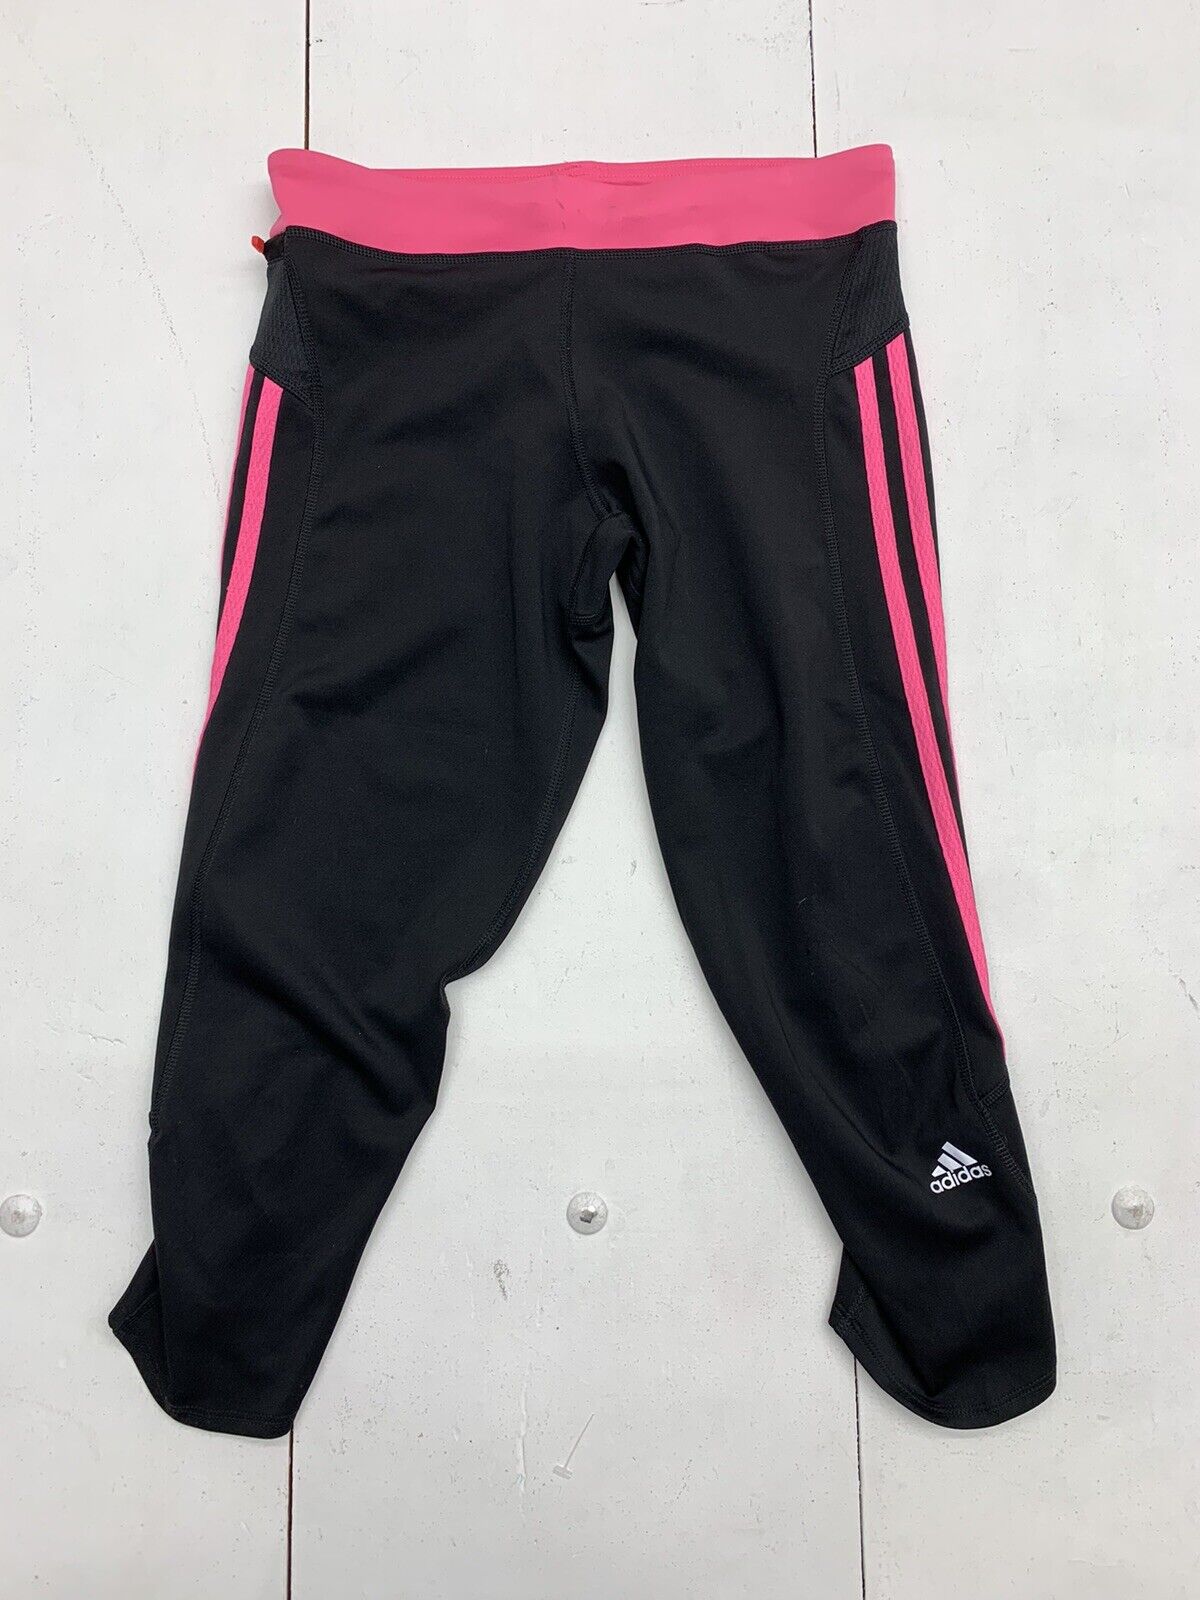 Adidas Pink Stripe Leggings Size Small